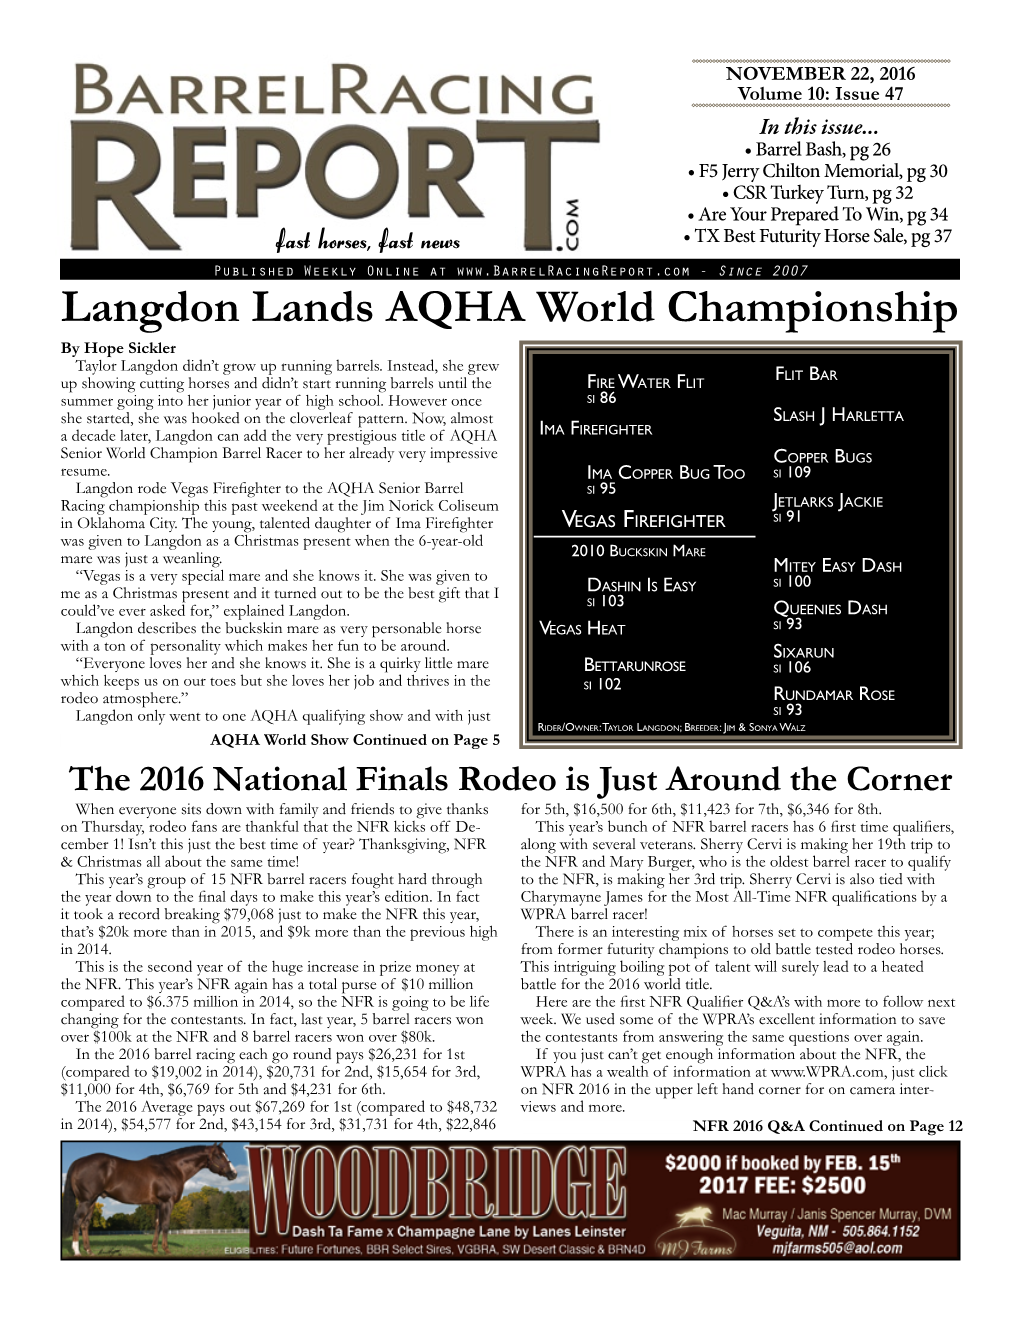 Langdon Lands AQHA World Championship by Hope Sickler Taylor Langdon Didn’T Grow up Running Barrels